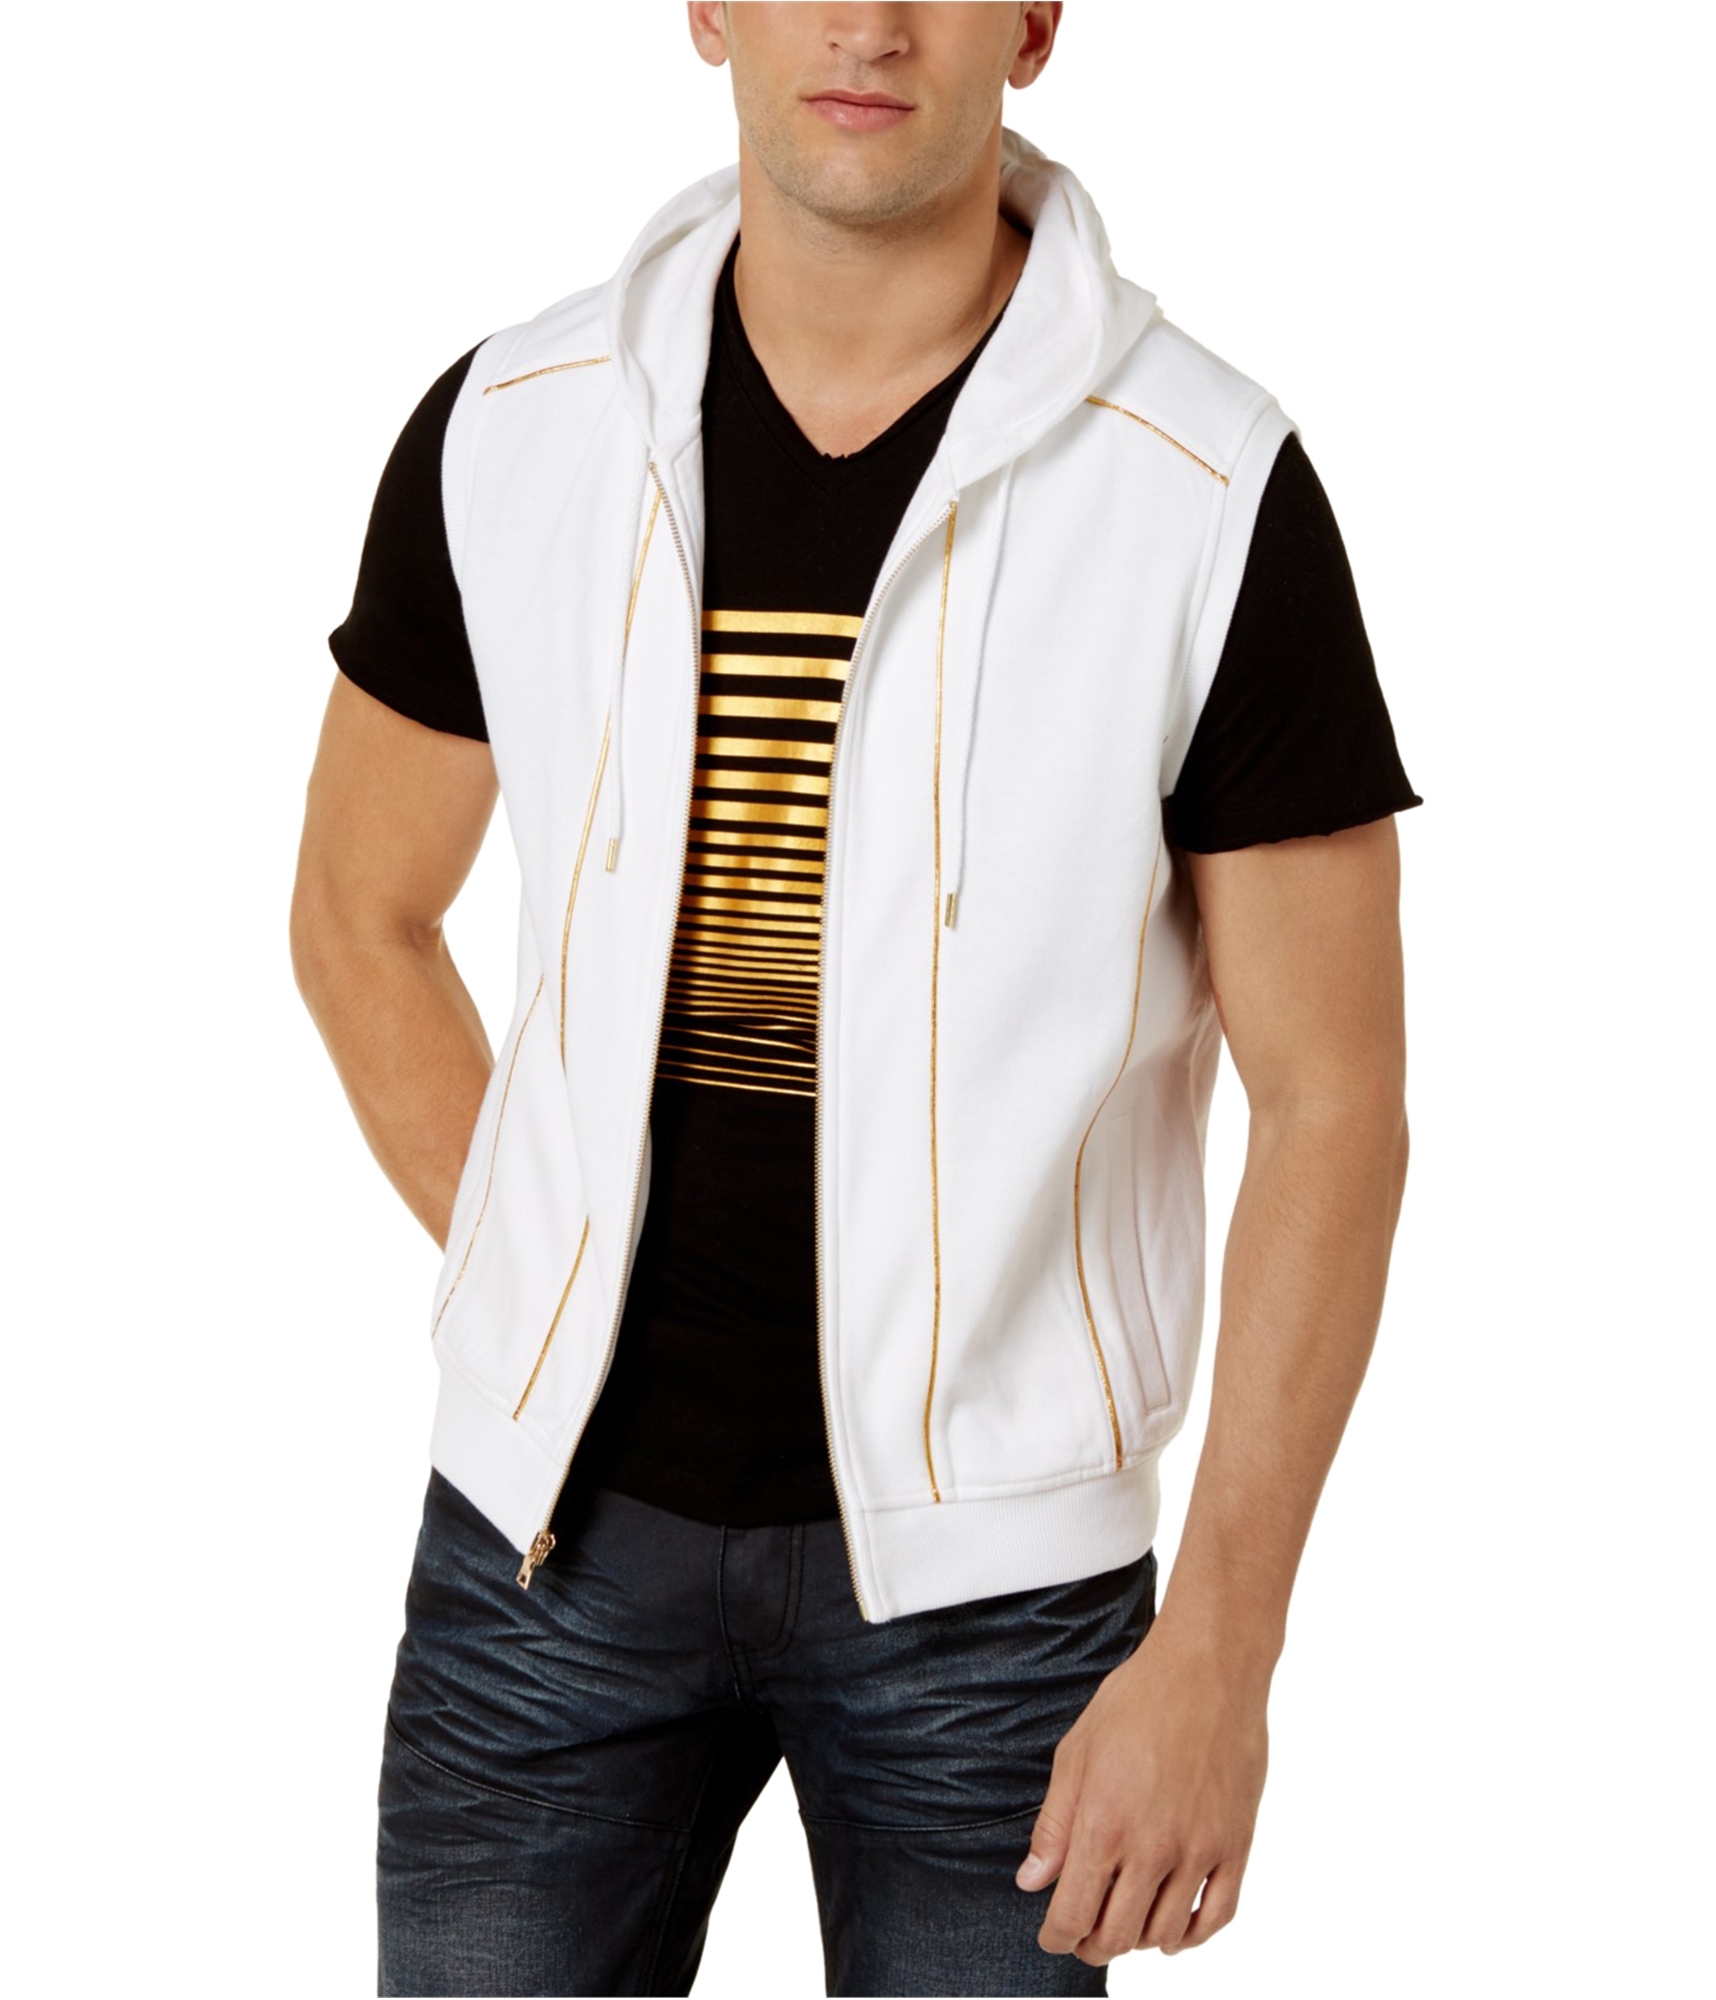 Dakraam Madison Ver weg Buy a Mens I-N-C Gold Piping Sweater Vest Online | TagsWeekly.com